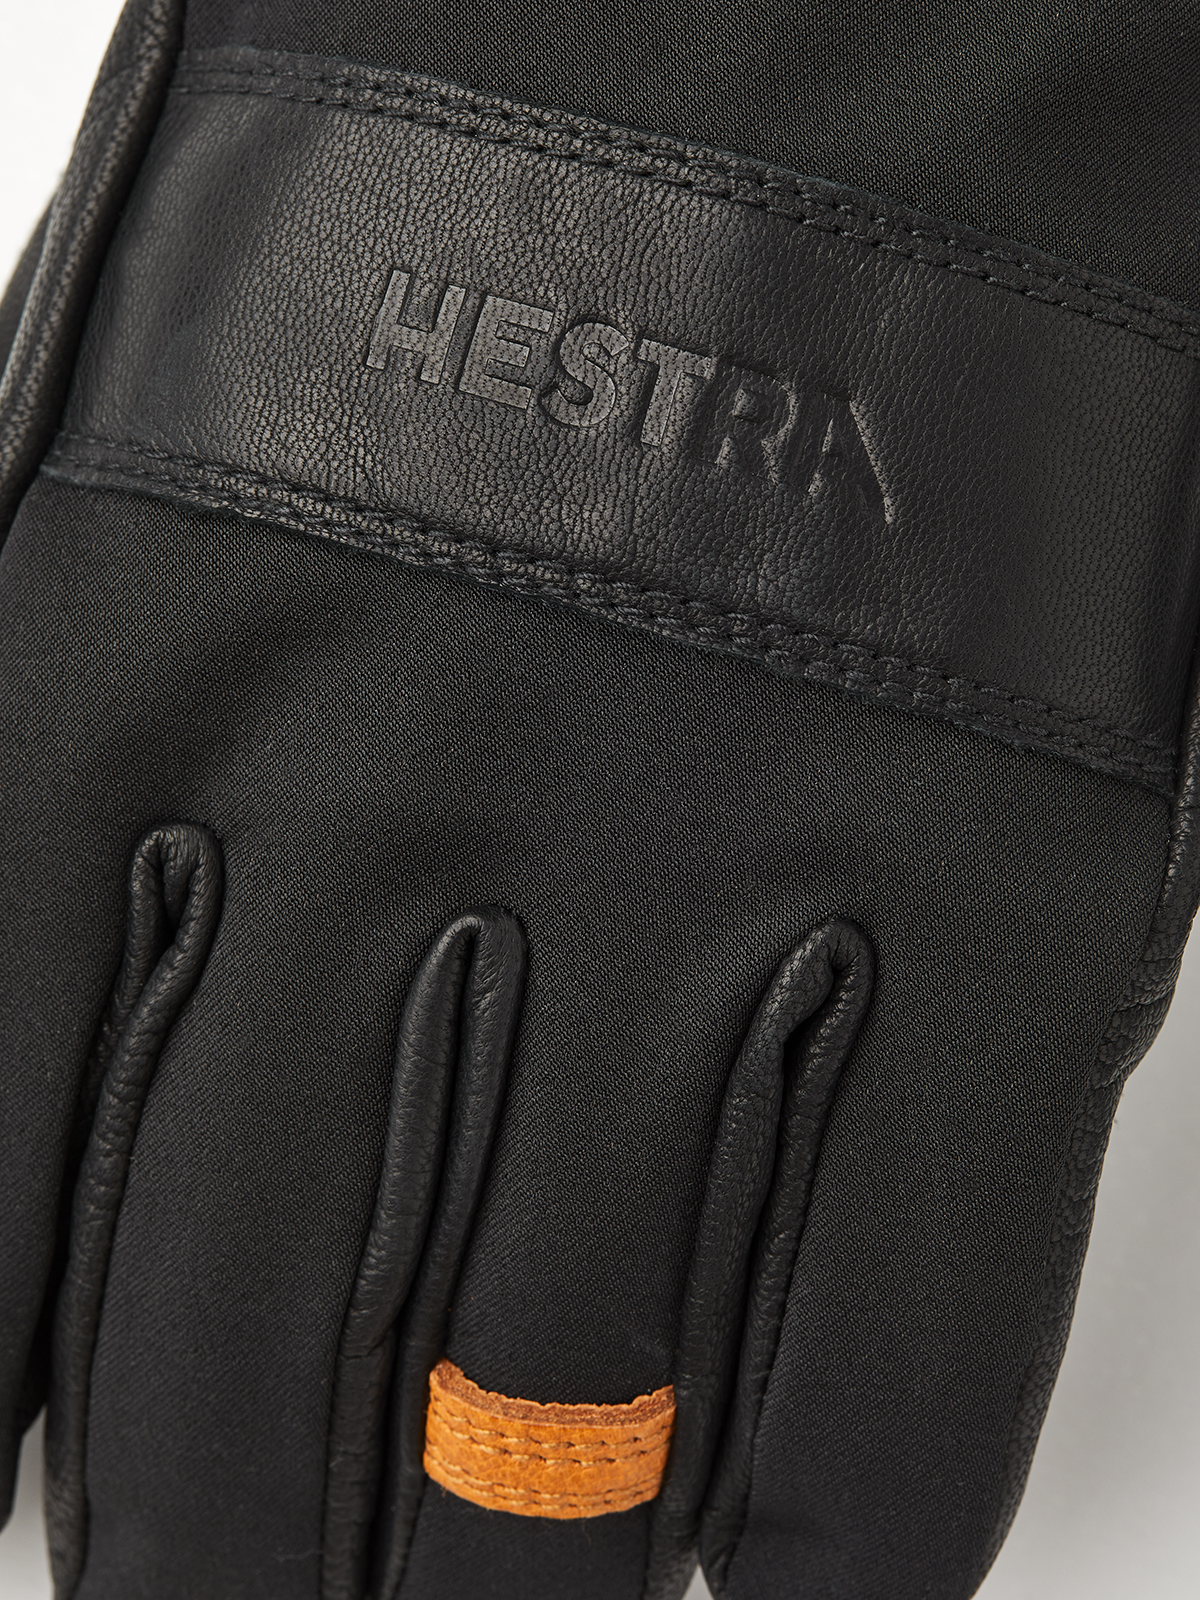 Highland Glove 5-finger - Black | Hestra Gloves